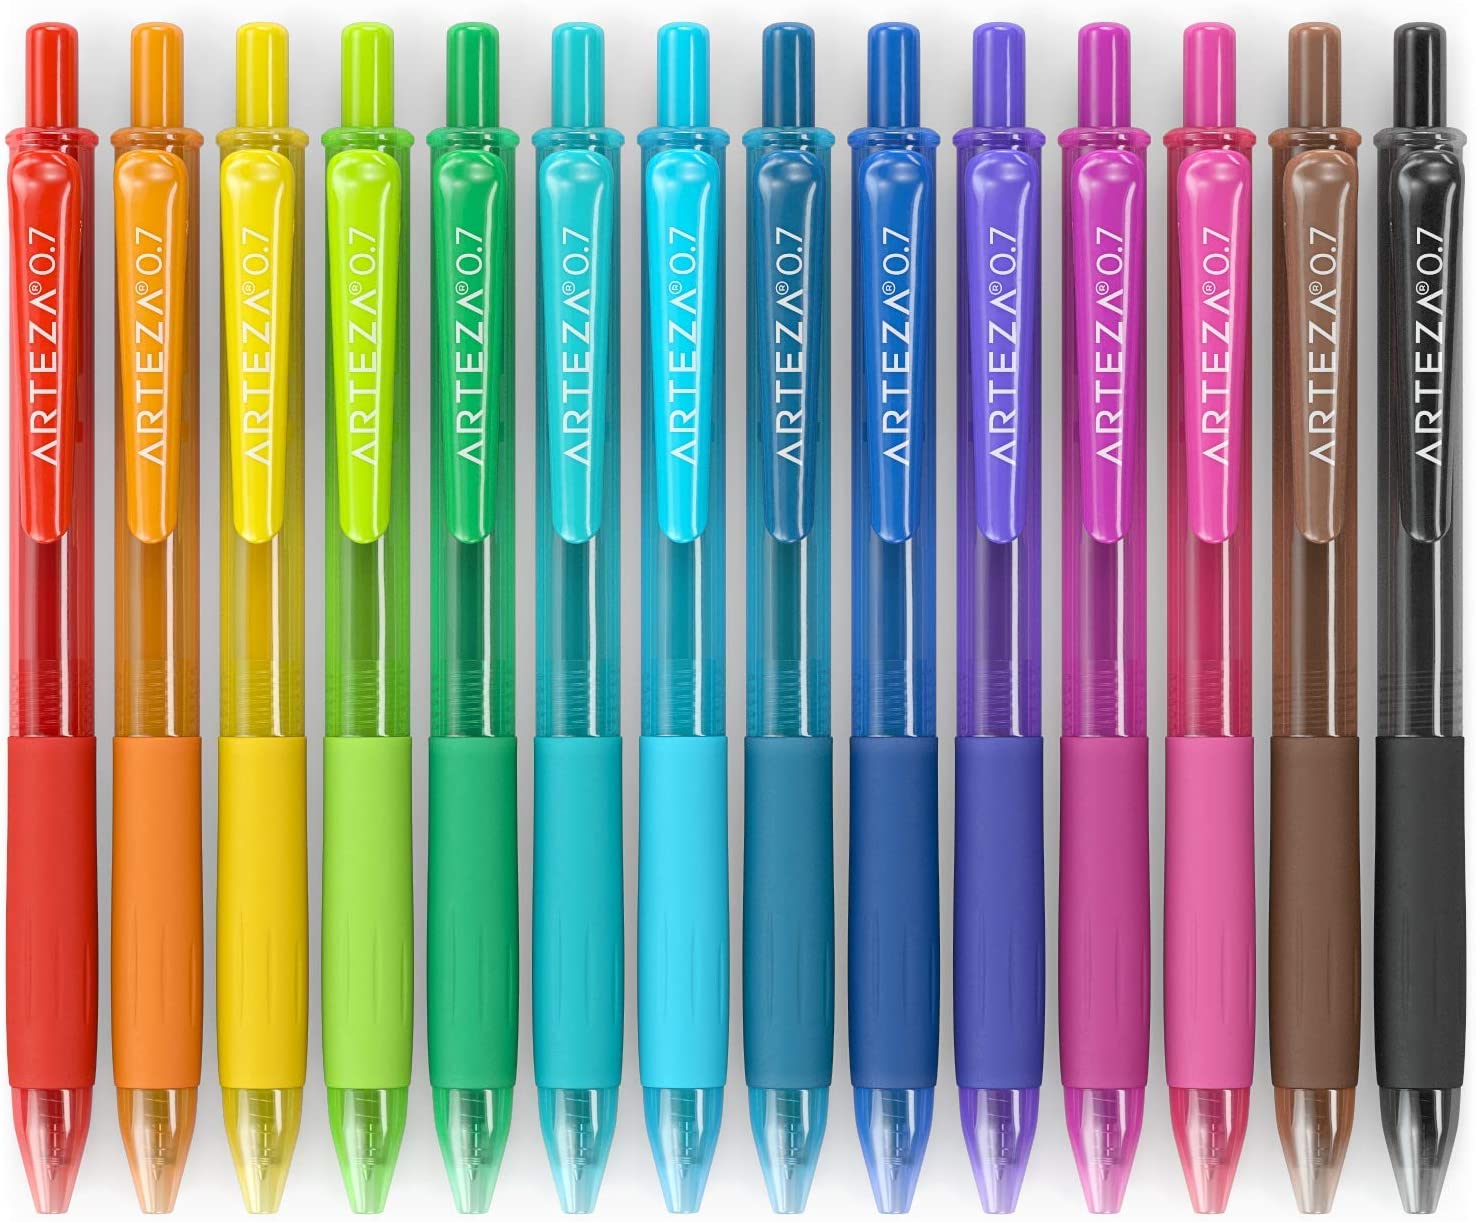 Arteza Retractable Gel Ink Colored Pens Set, Bright Colors - Doodle, Draw, Journal - 14 Pack